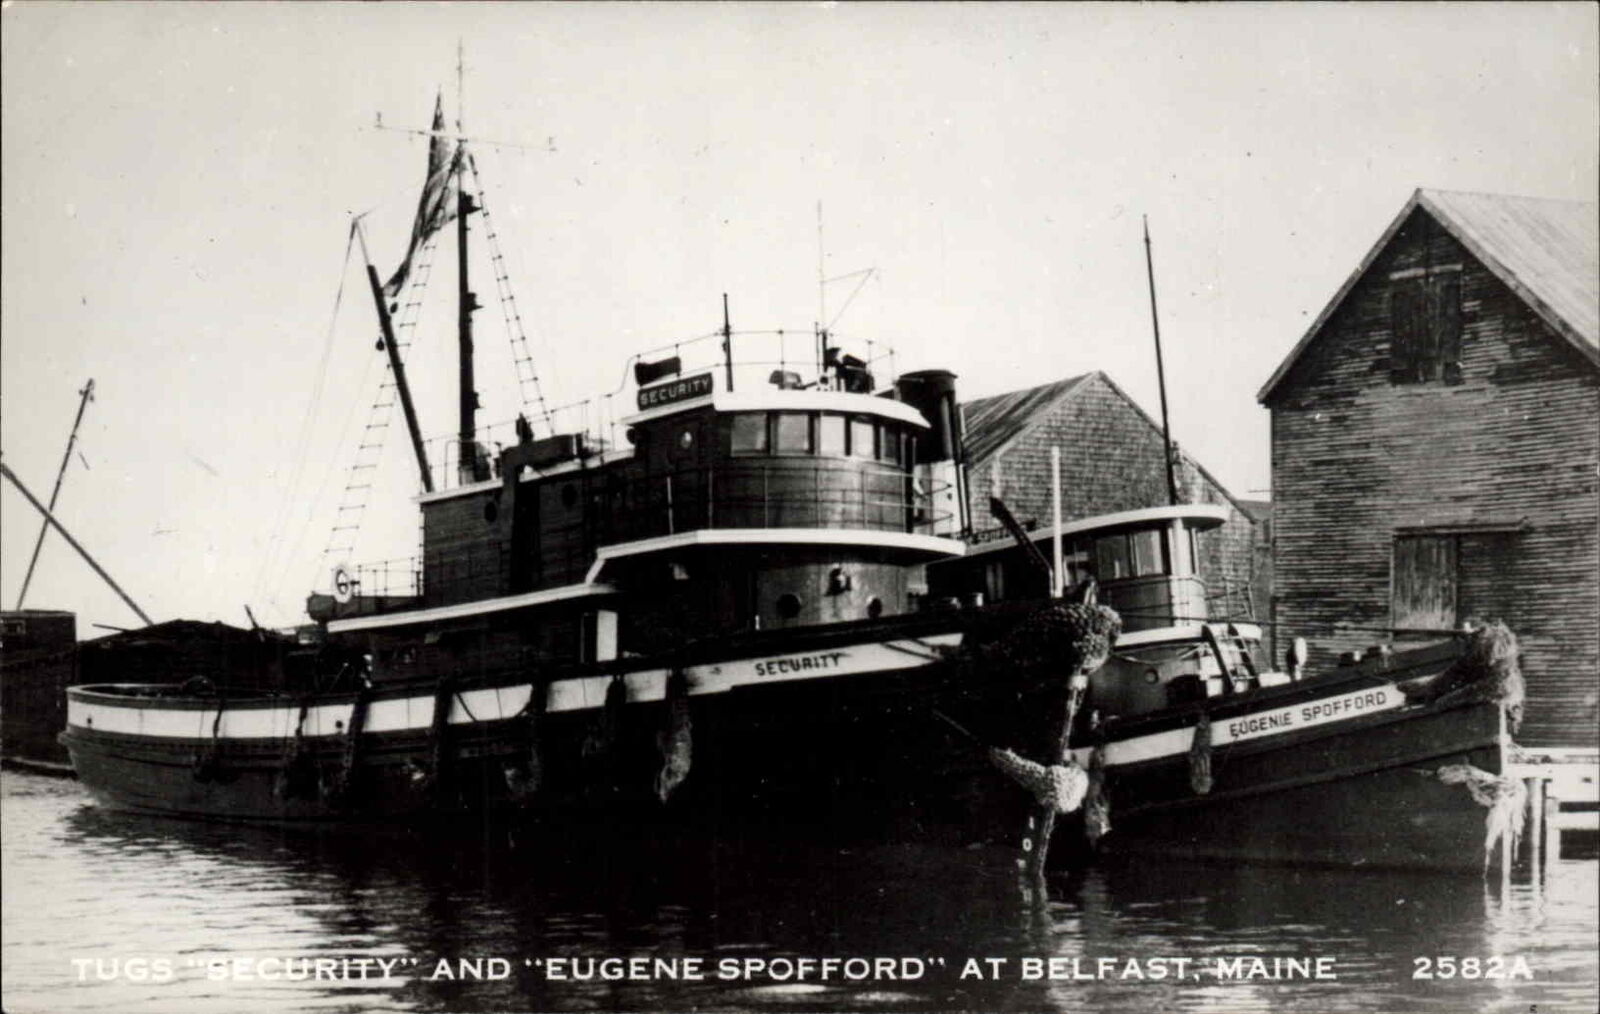 Belfast ME Tug Boats Security & Eugene Spofford c1910s Image c1960 KODAK RPPC